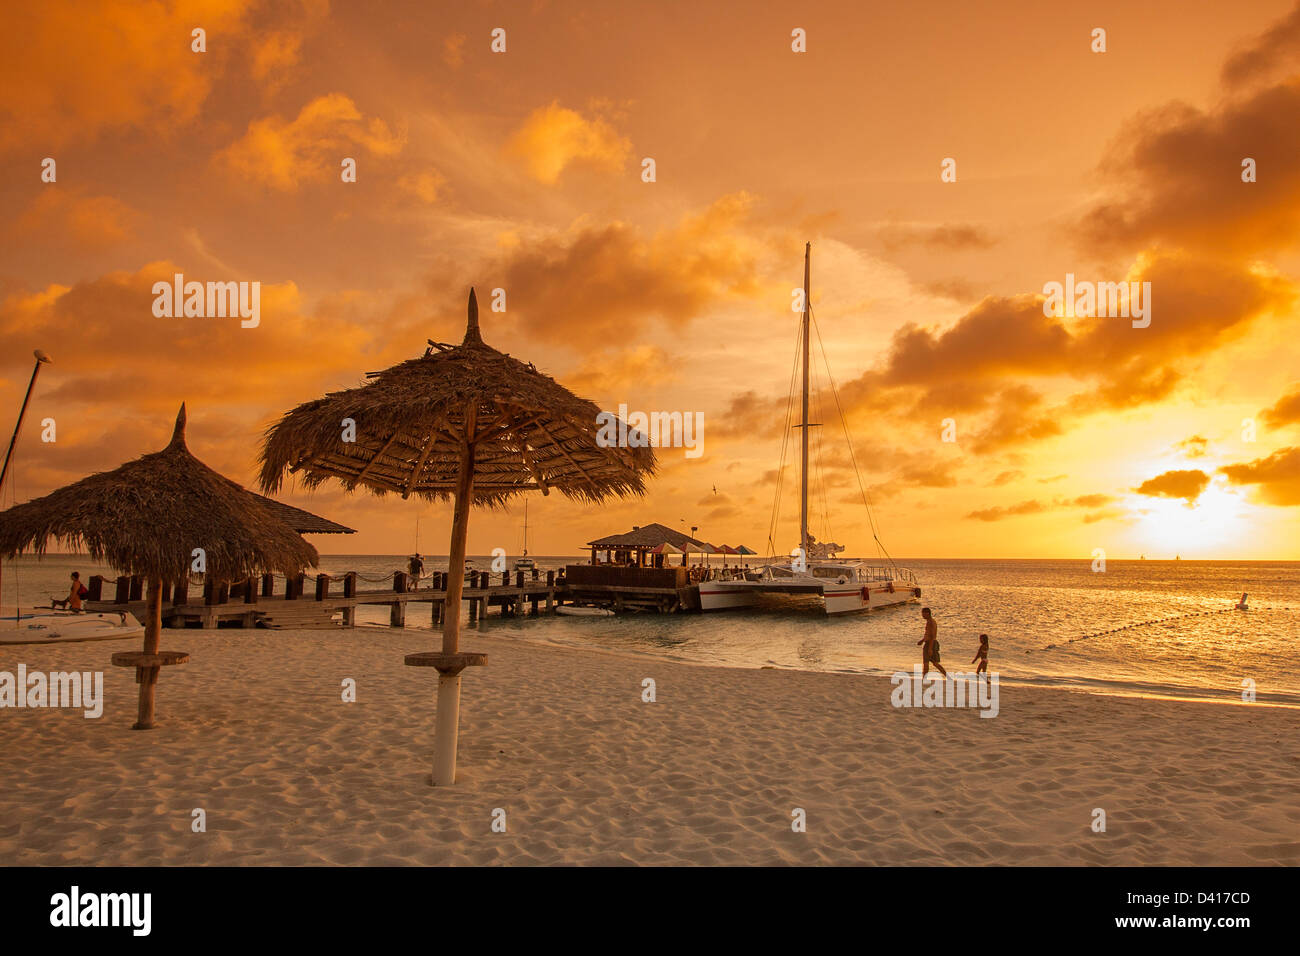 Aruba Palm Beach sunset Antille Olandesi Caraibi America Centrale ABC Catamarano Foto Stock